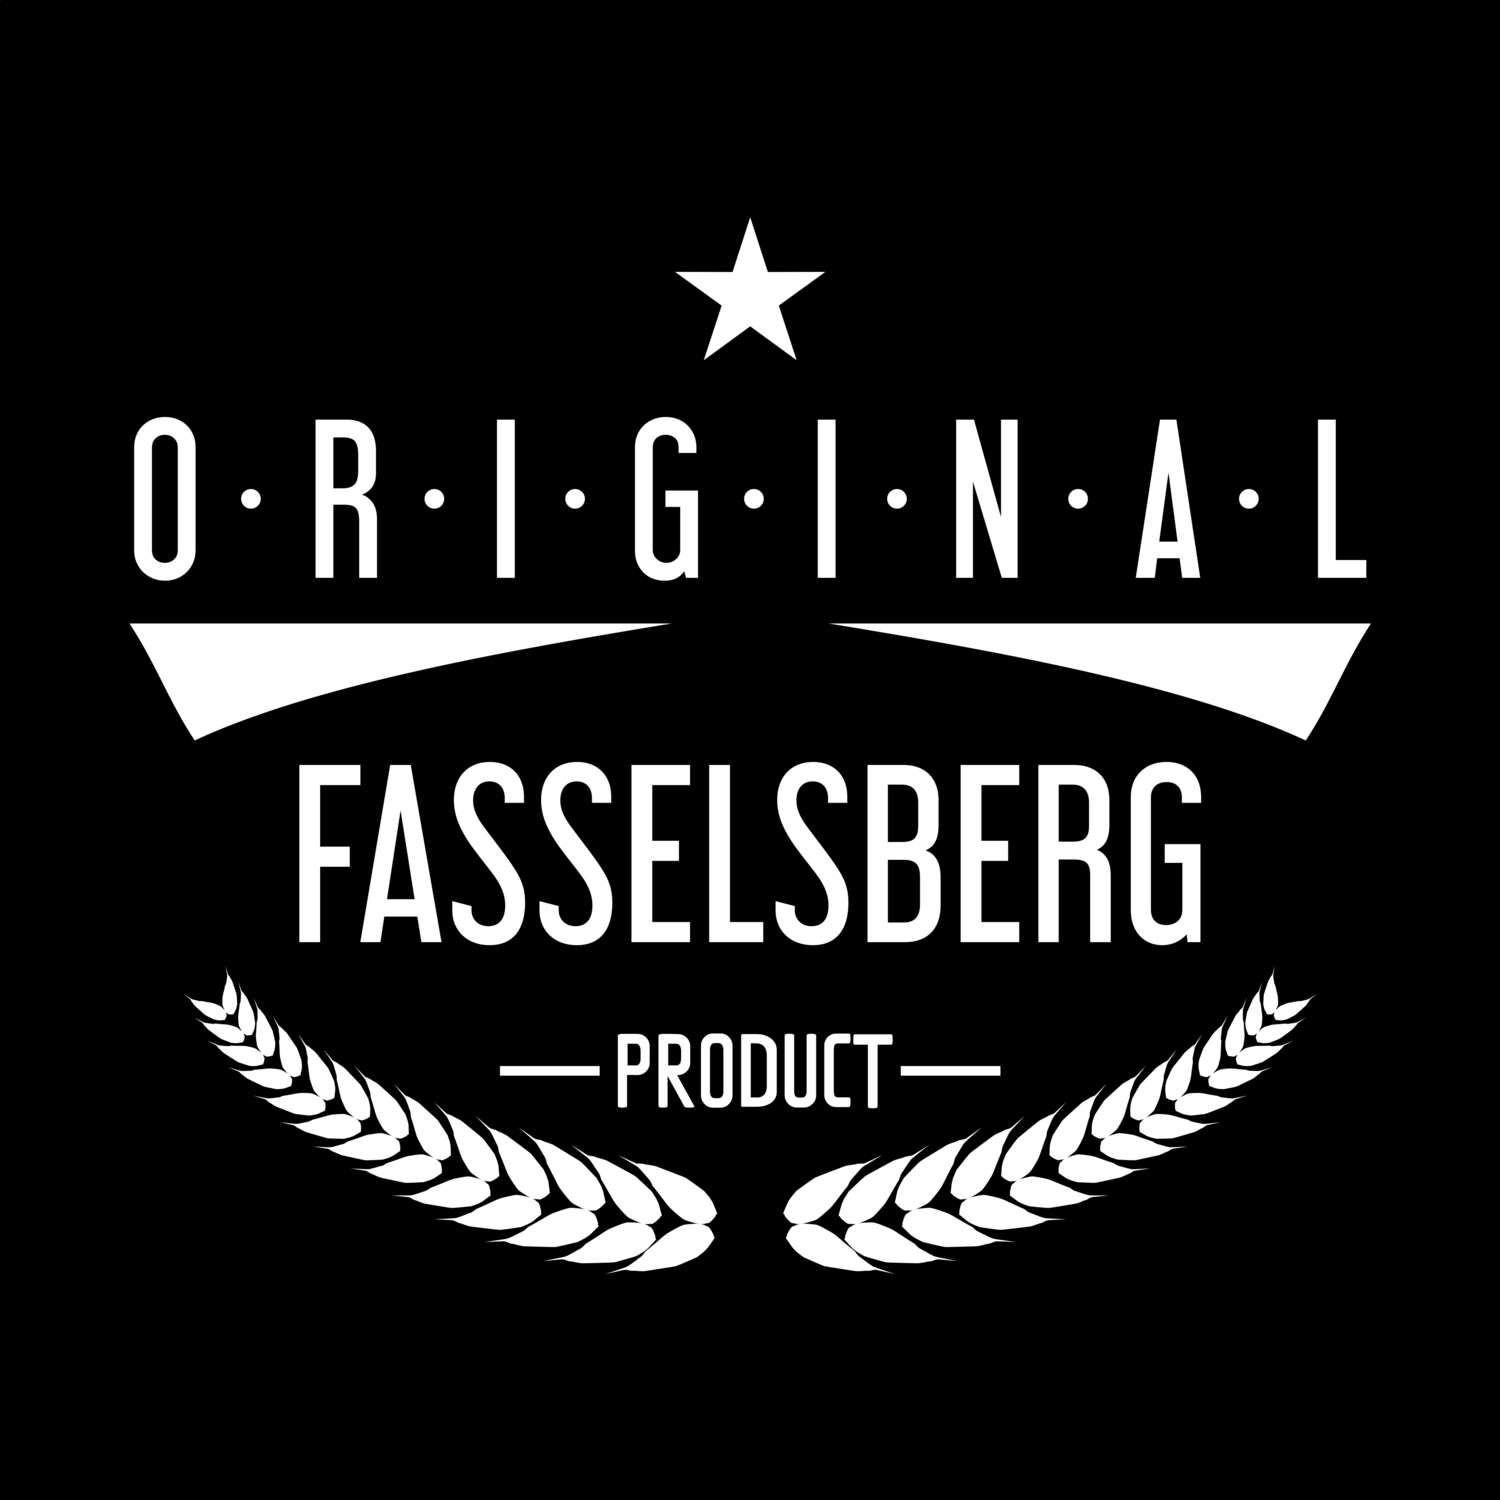 Fasselsberg T-Shirt »Original Product«